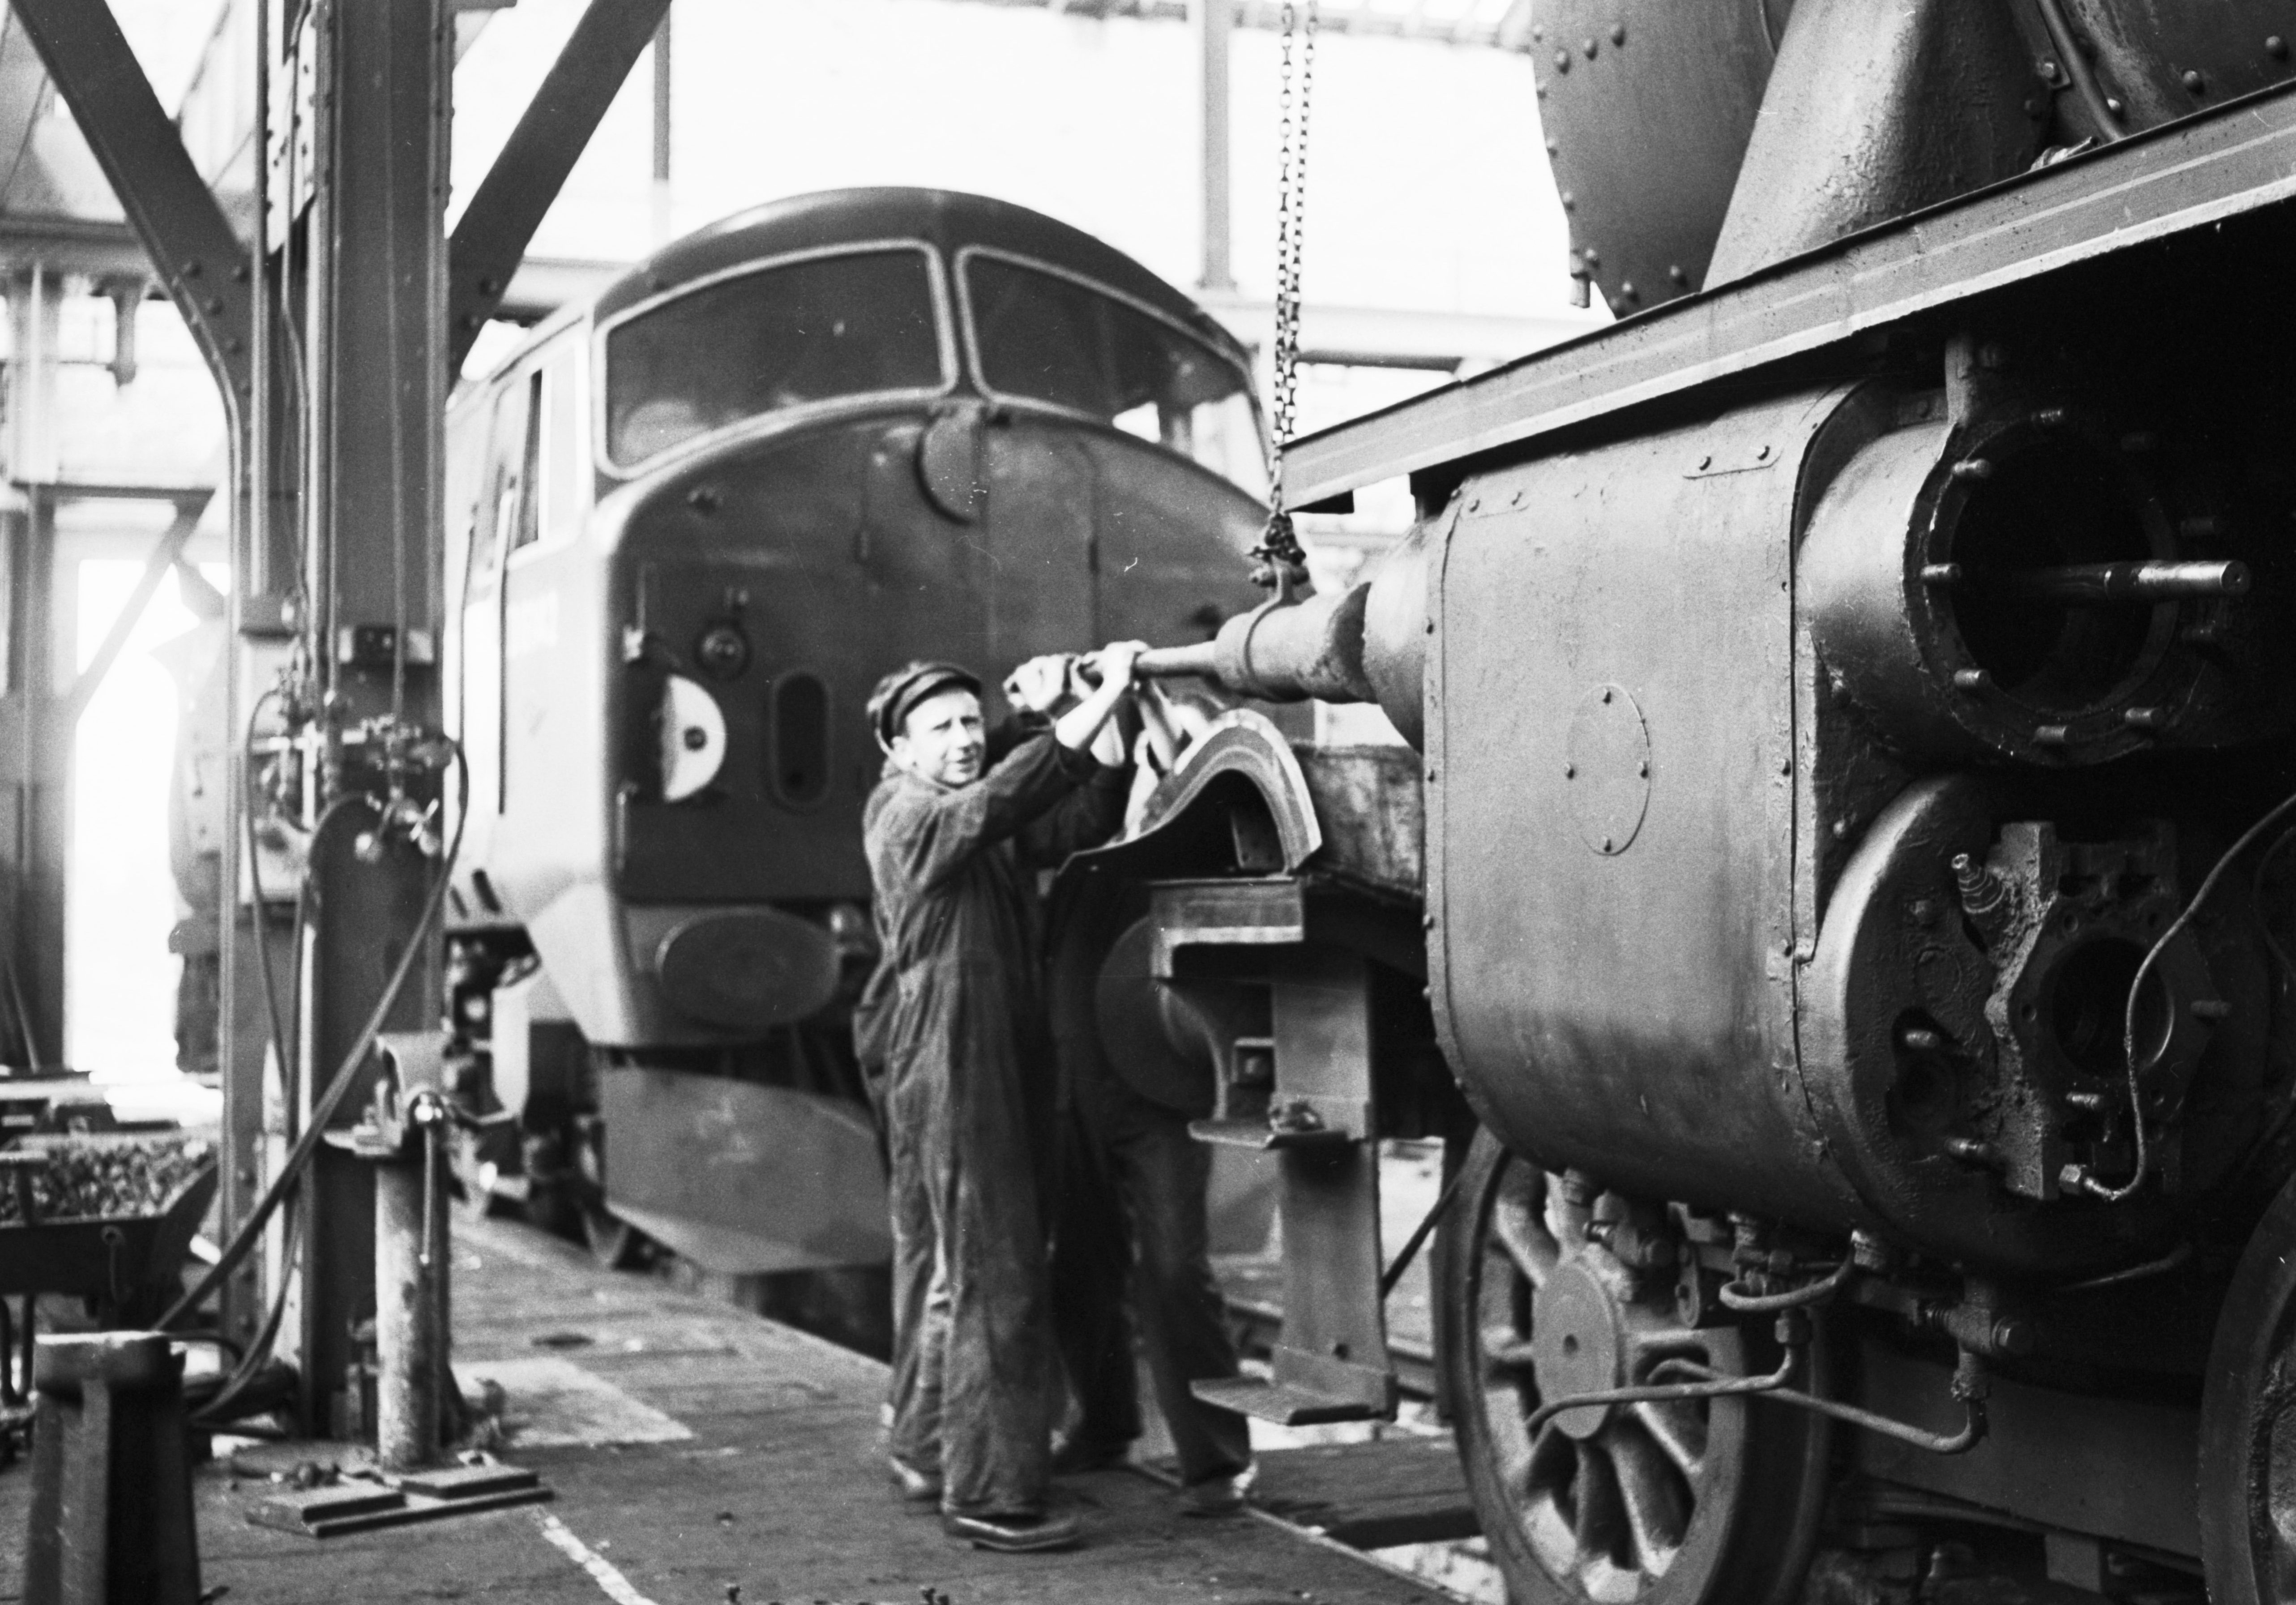 AN Inverurie Loco Works 1962-08-28_5 (C)AJL
Neg.No. G149
"Workmen at the Inverurie Loco Works working on the piston of a steam engine in 1962."